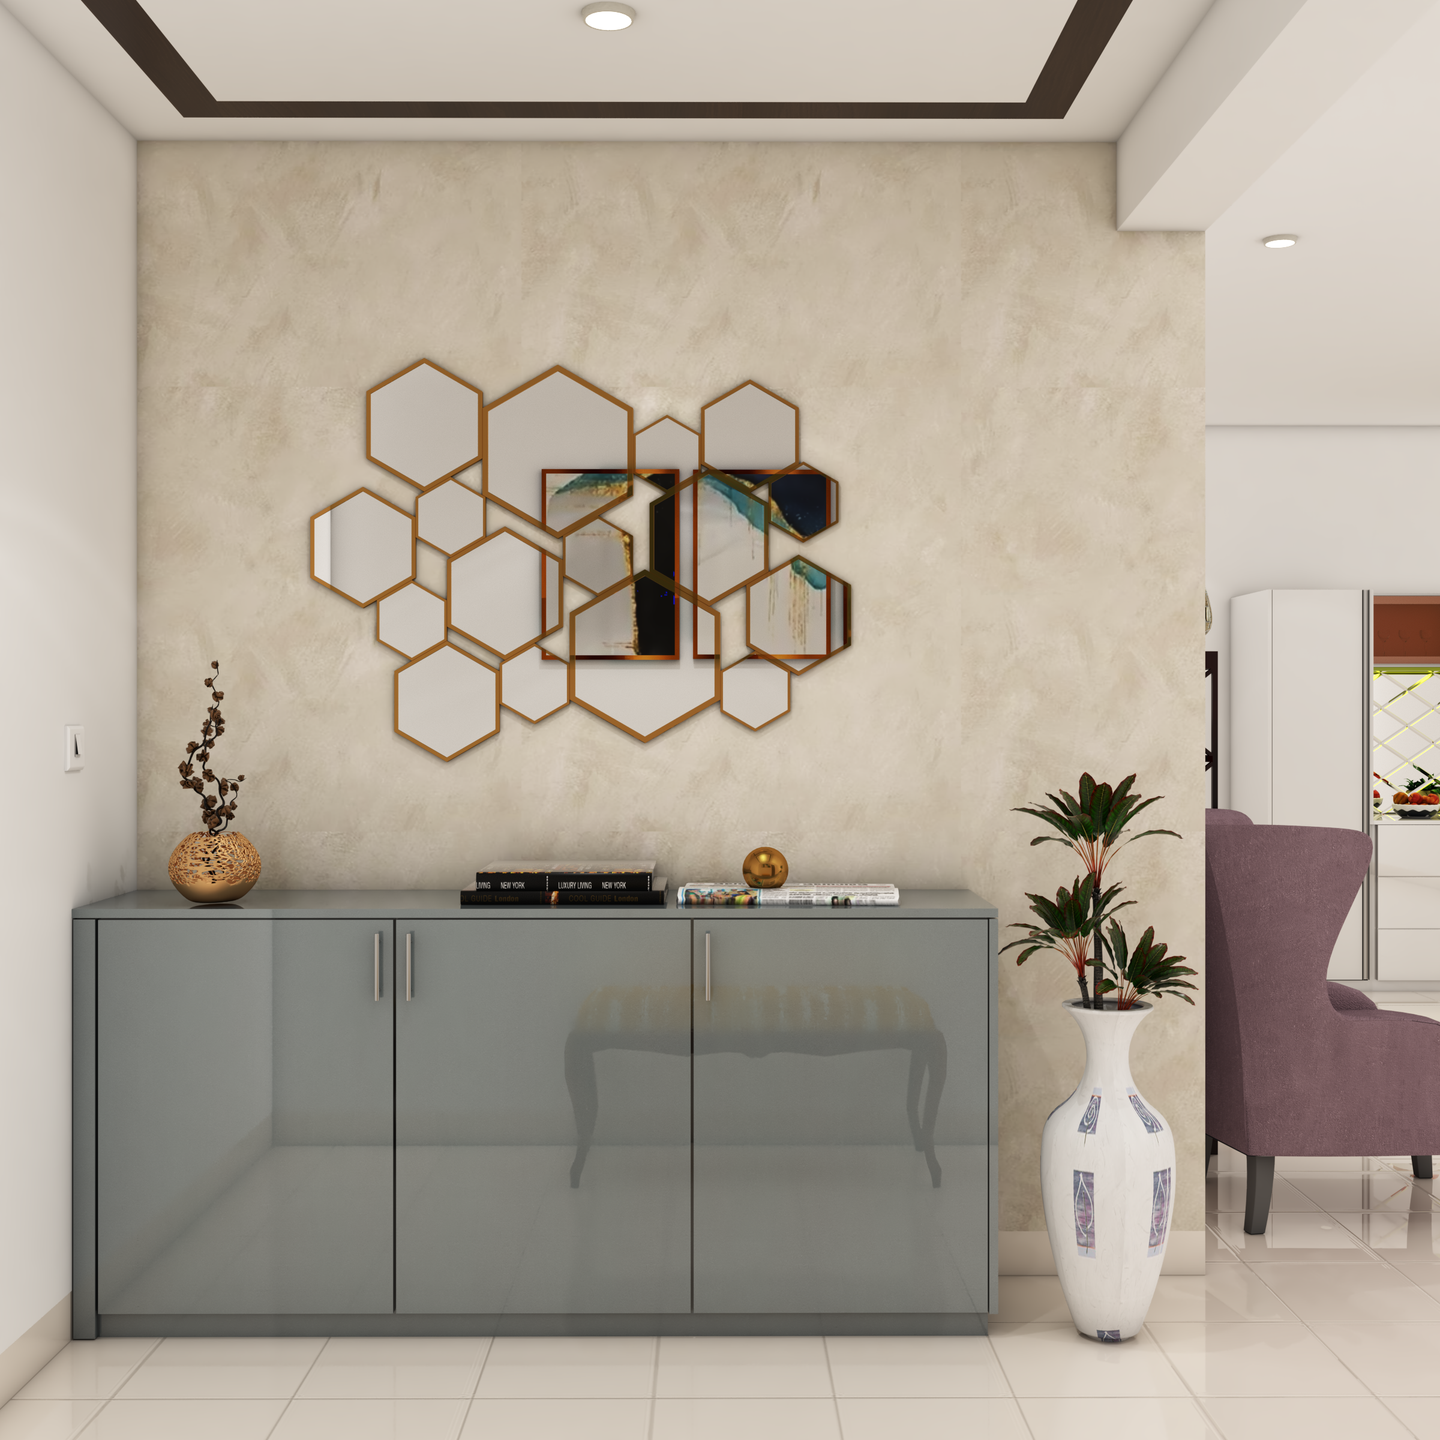 Modern Foyer Design With Hexagonal Mirrors - Livspace